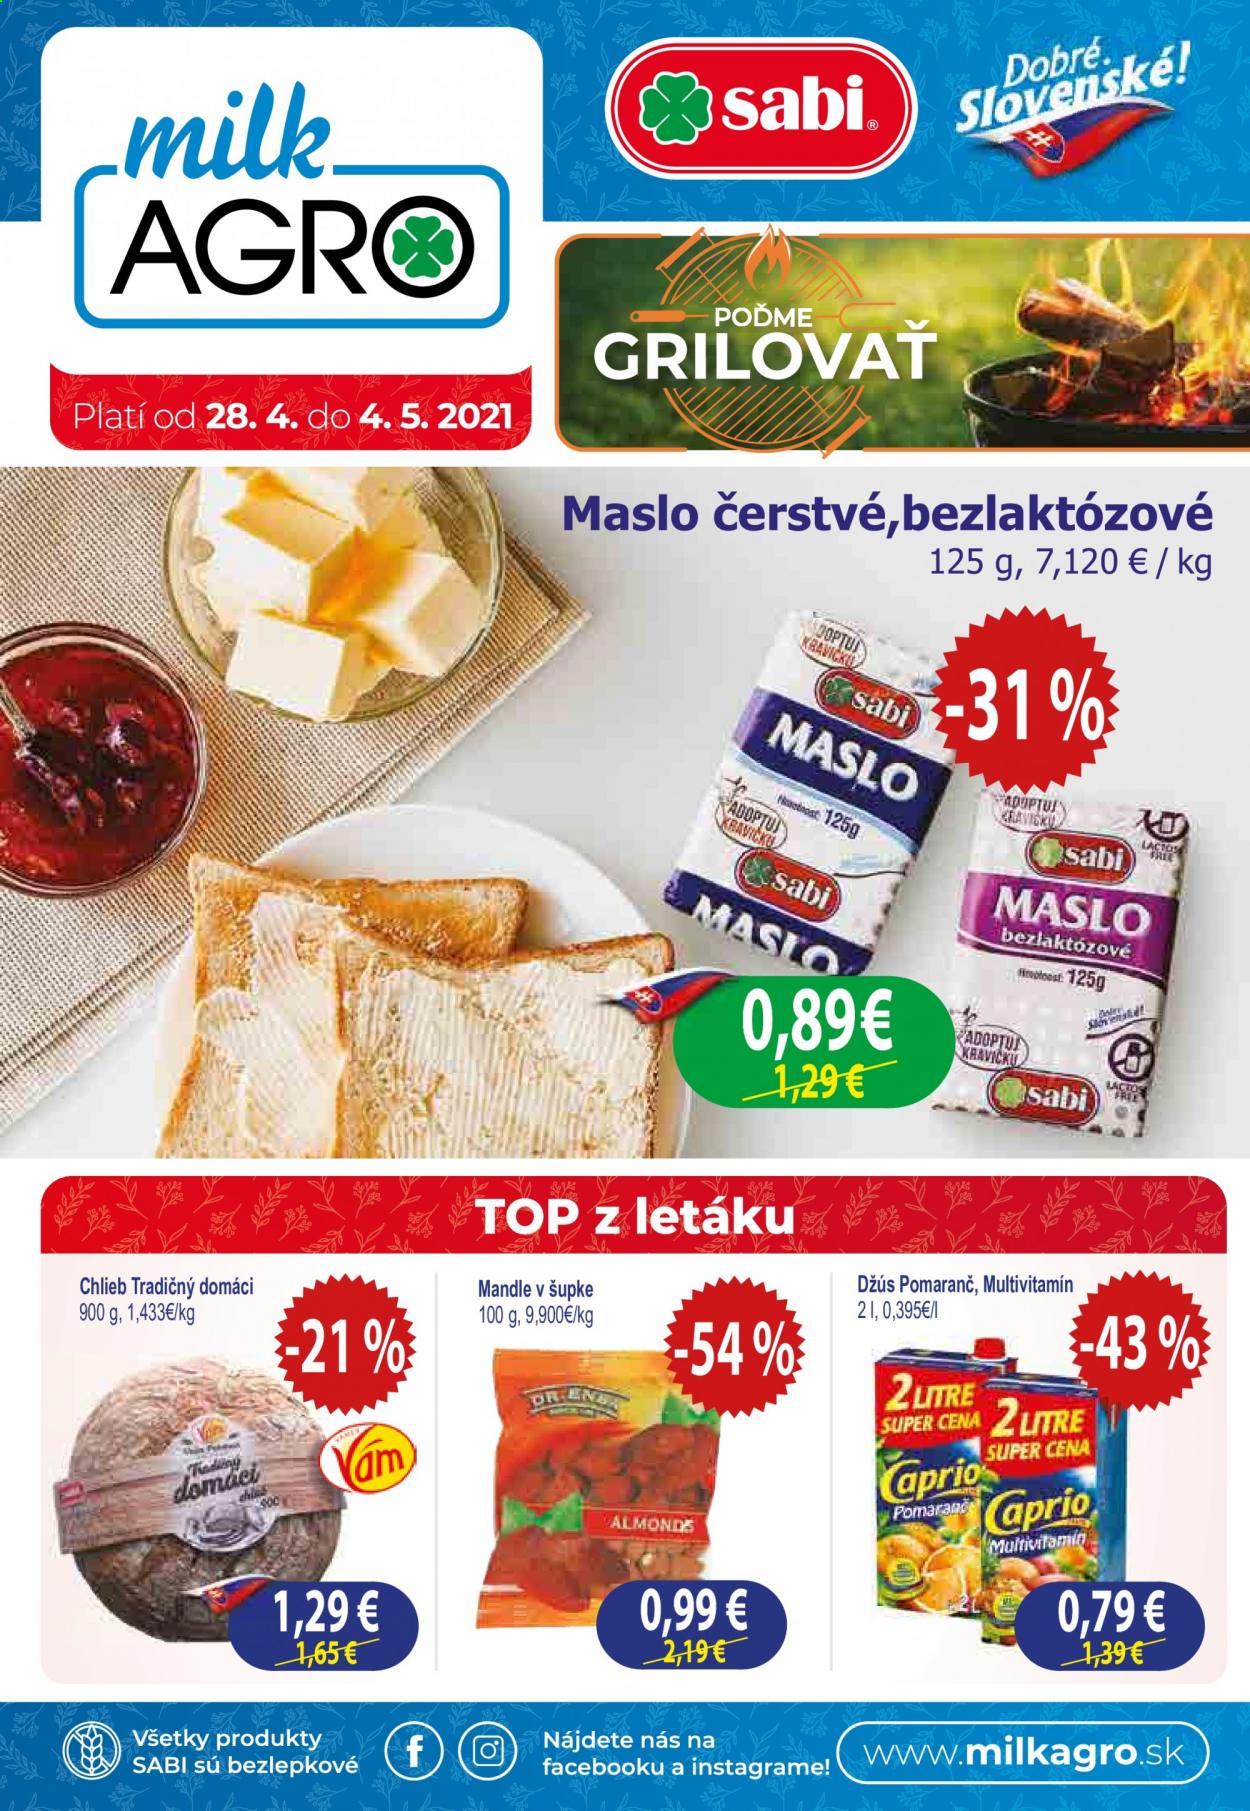 thumbnail - Leták Milk AGRO - 28.4.2021 - 4.5.2021 - Produkty v akcii - chlieb, džús, mandle, maslo. Strana 1.